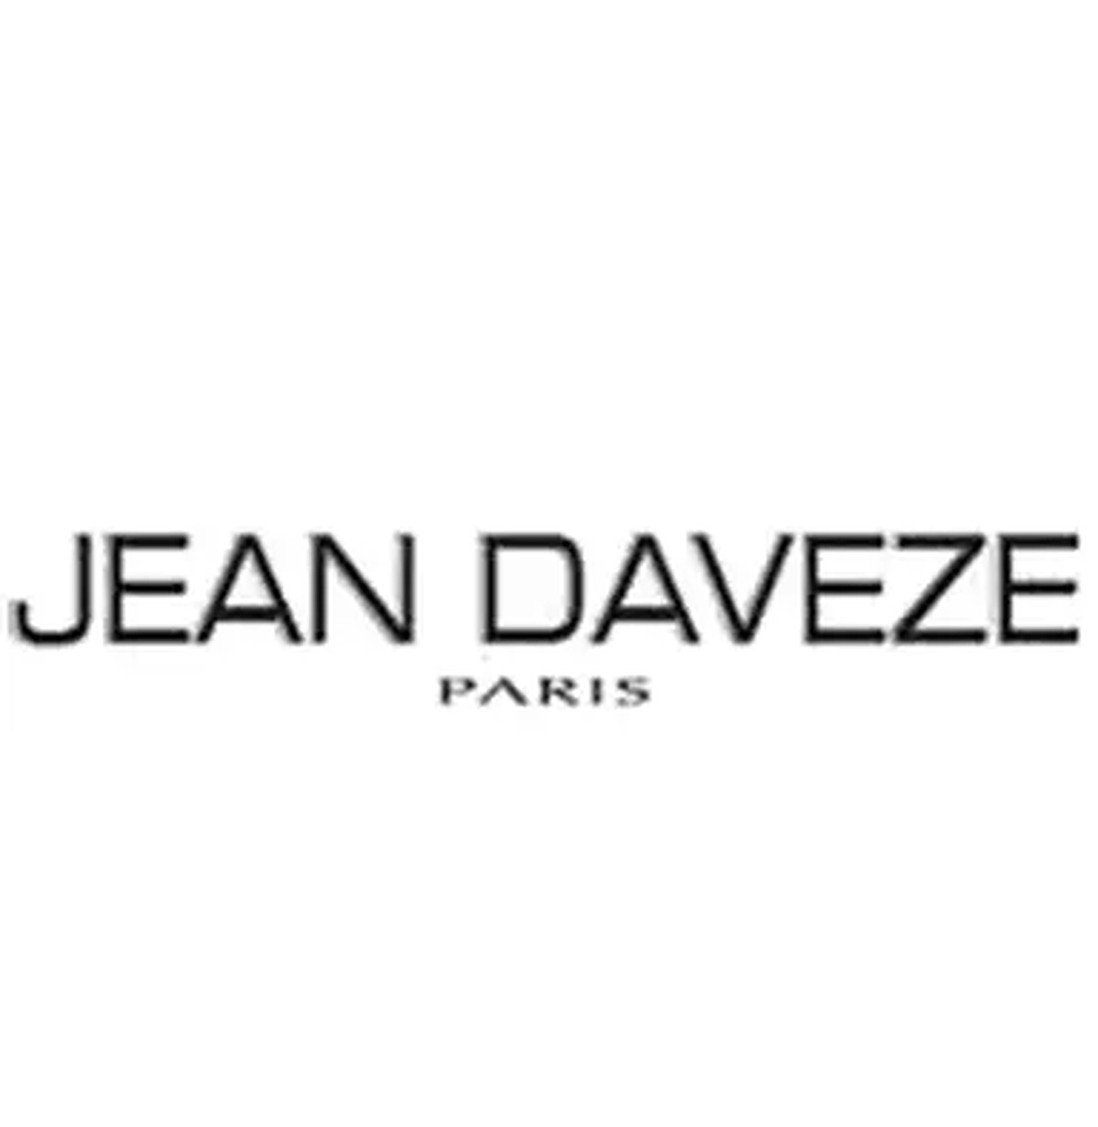 Jean d`Aveze